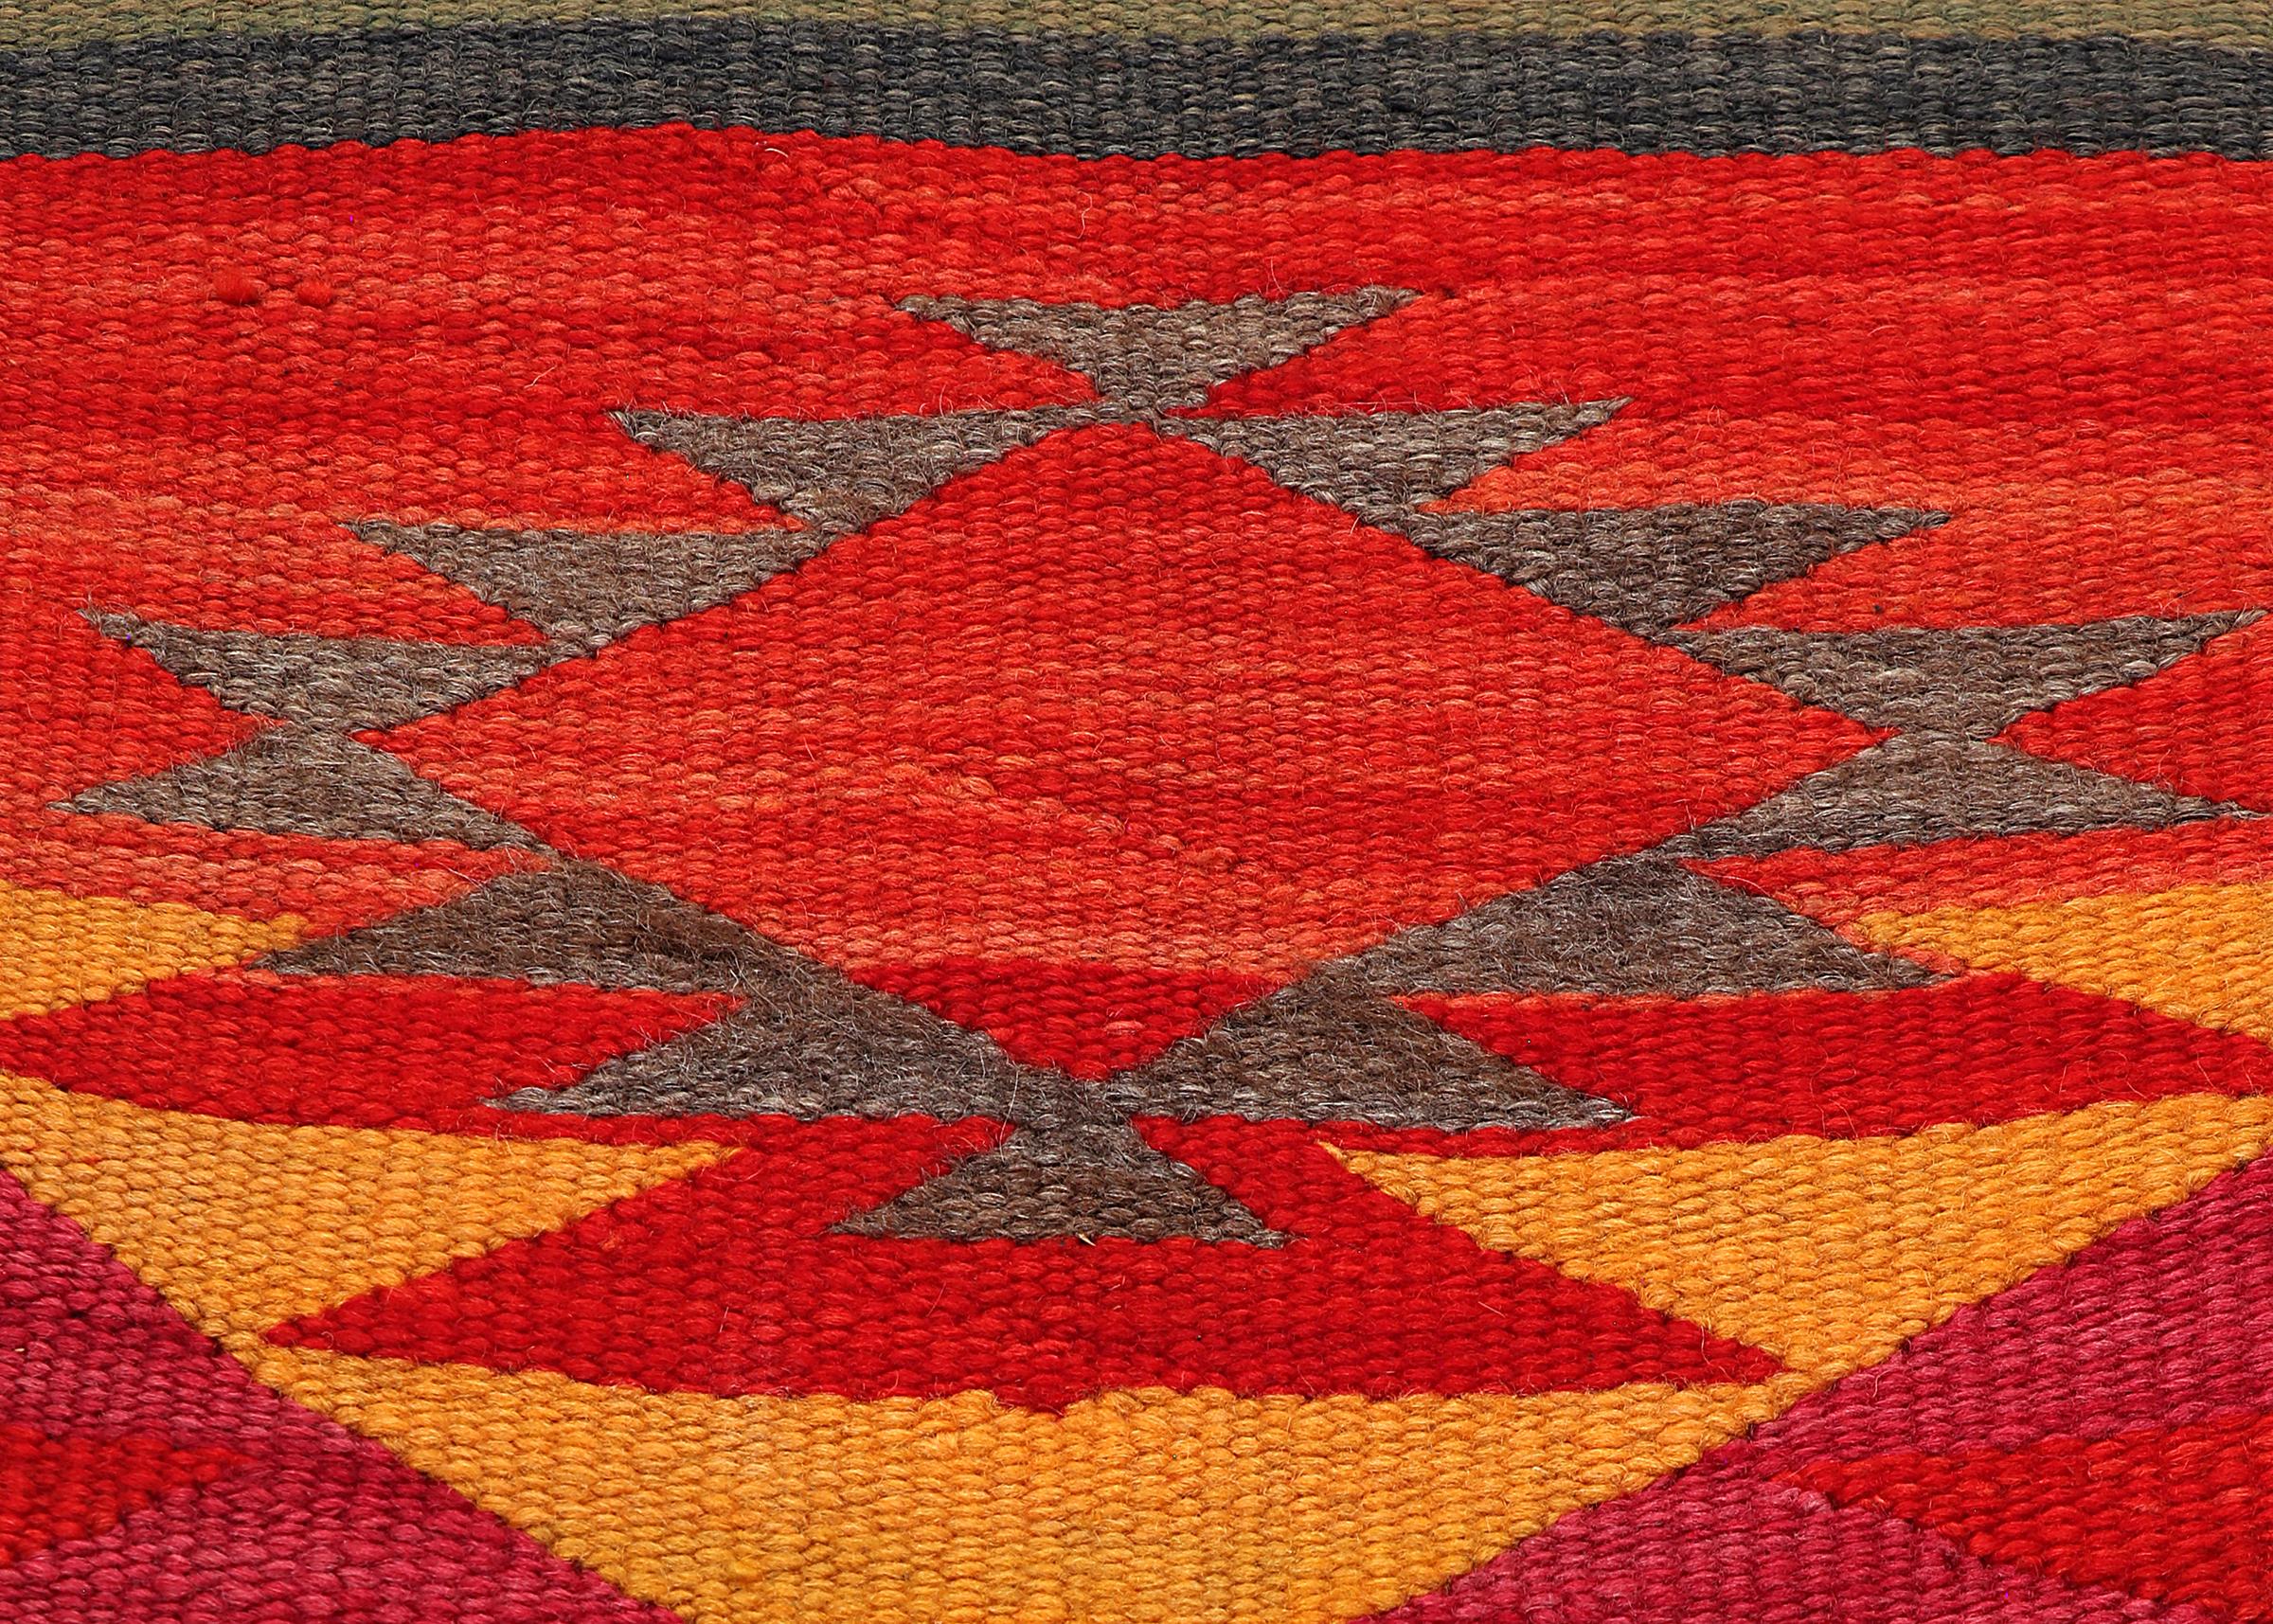 19th Century 1885 Navajo Weaving in Jewel Tones, Red, Yellow, Orange, and Brown